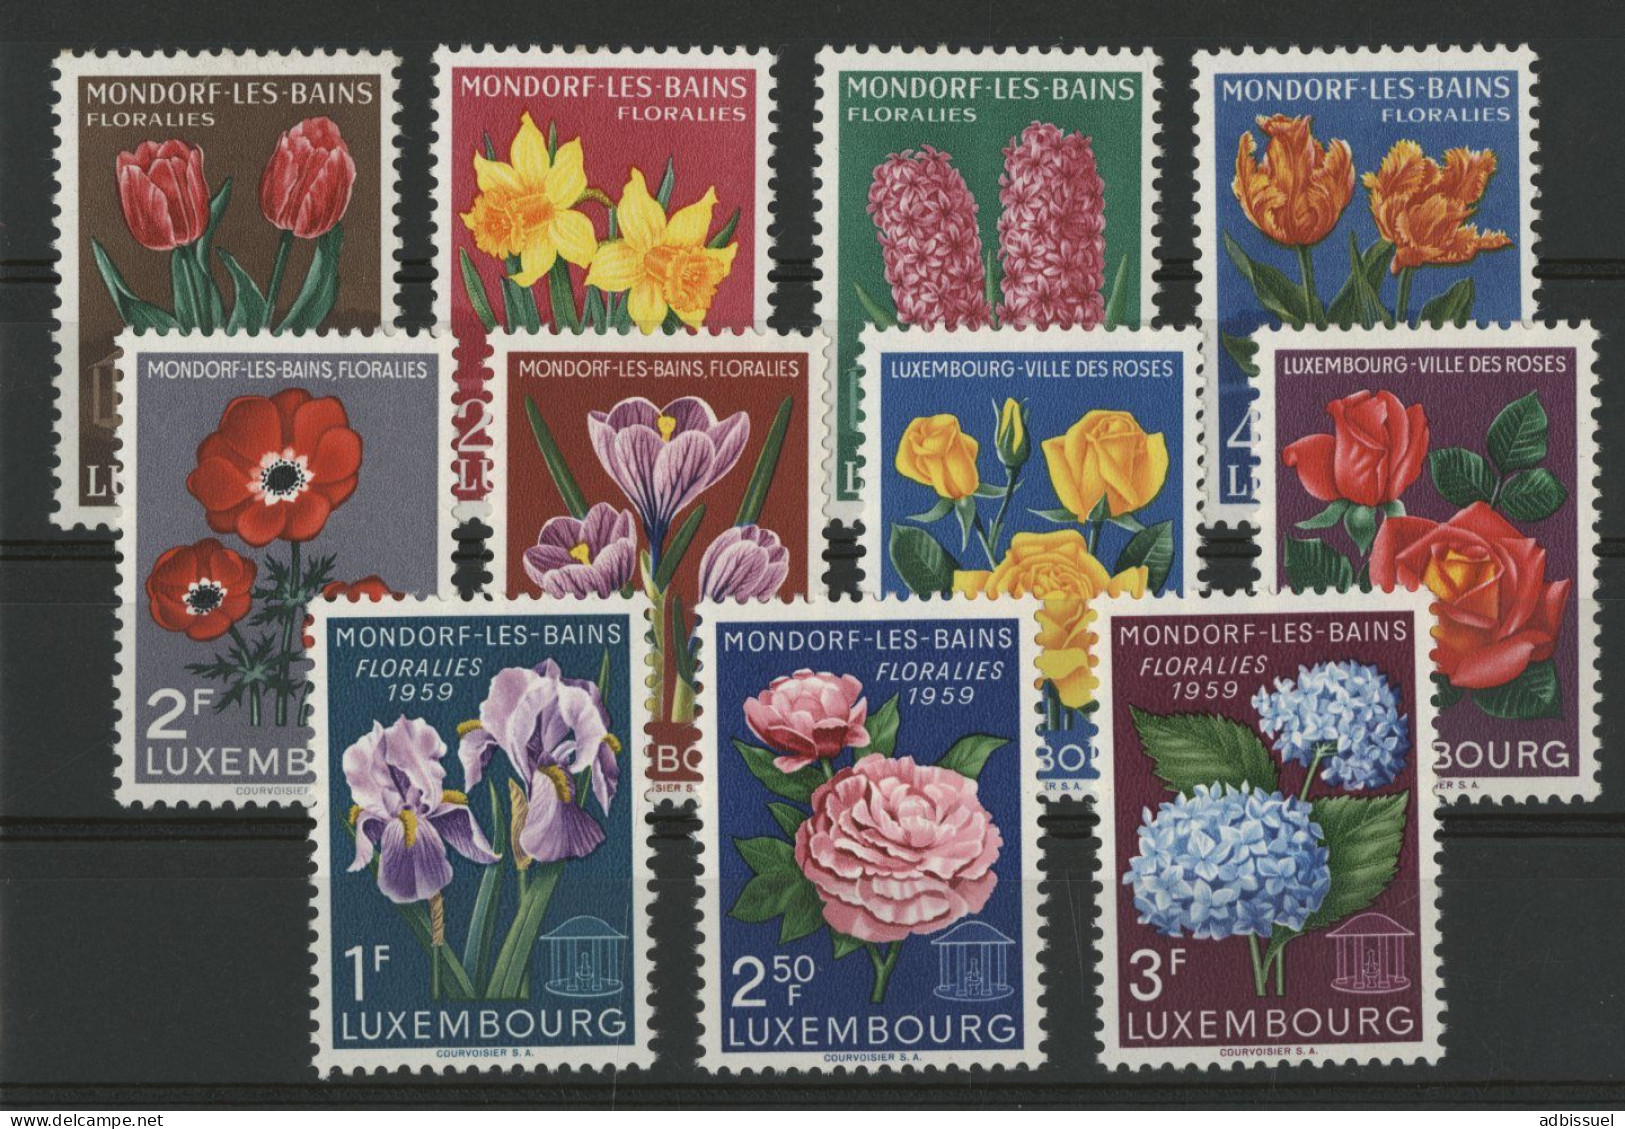 LUXEMBOURG 3 Séries FLEURS FLOWERS N° 490 à 493 + 506 à 509 + 564 à 566 Neufs ** (MNH) - Ungebraucht